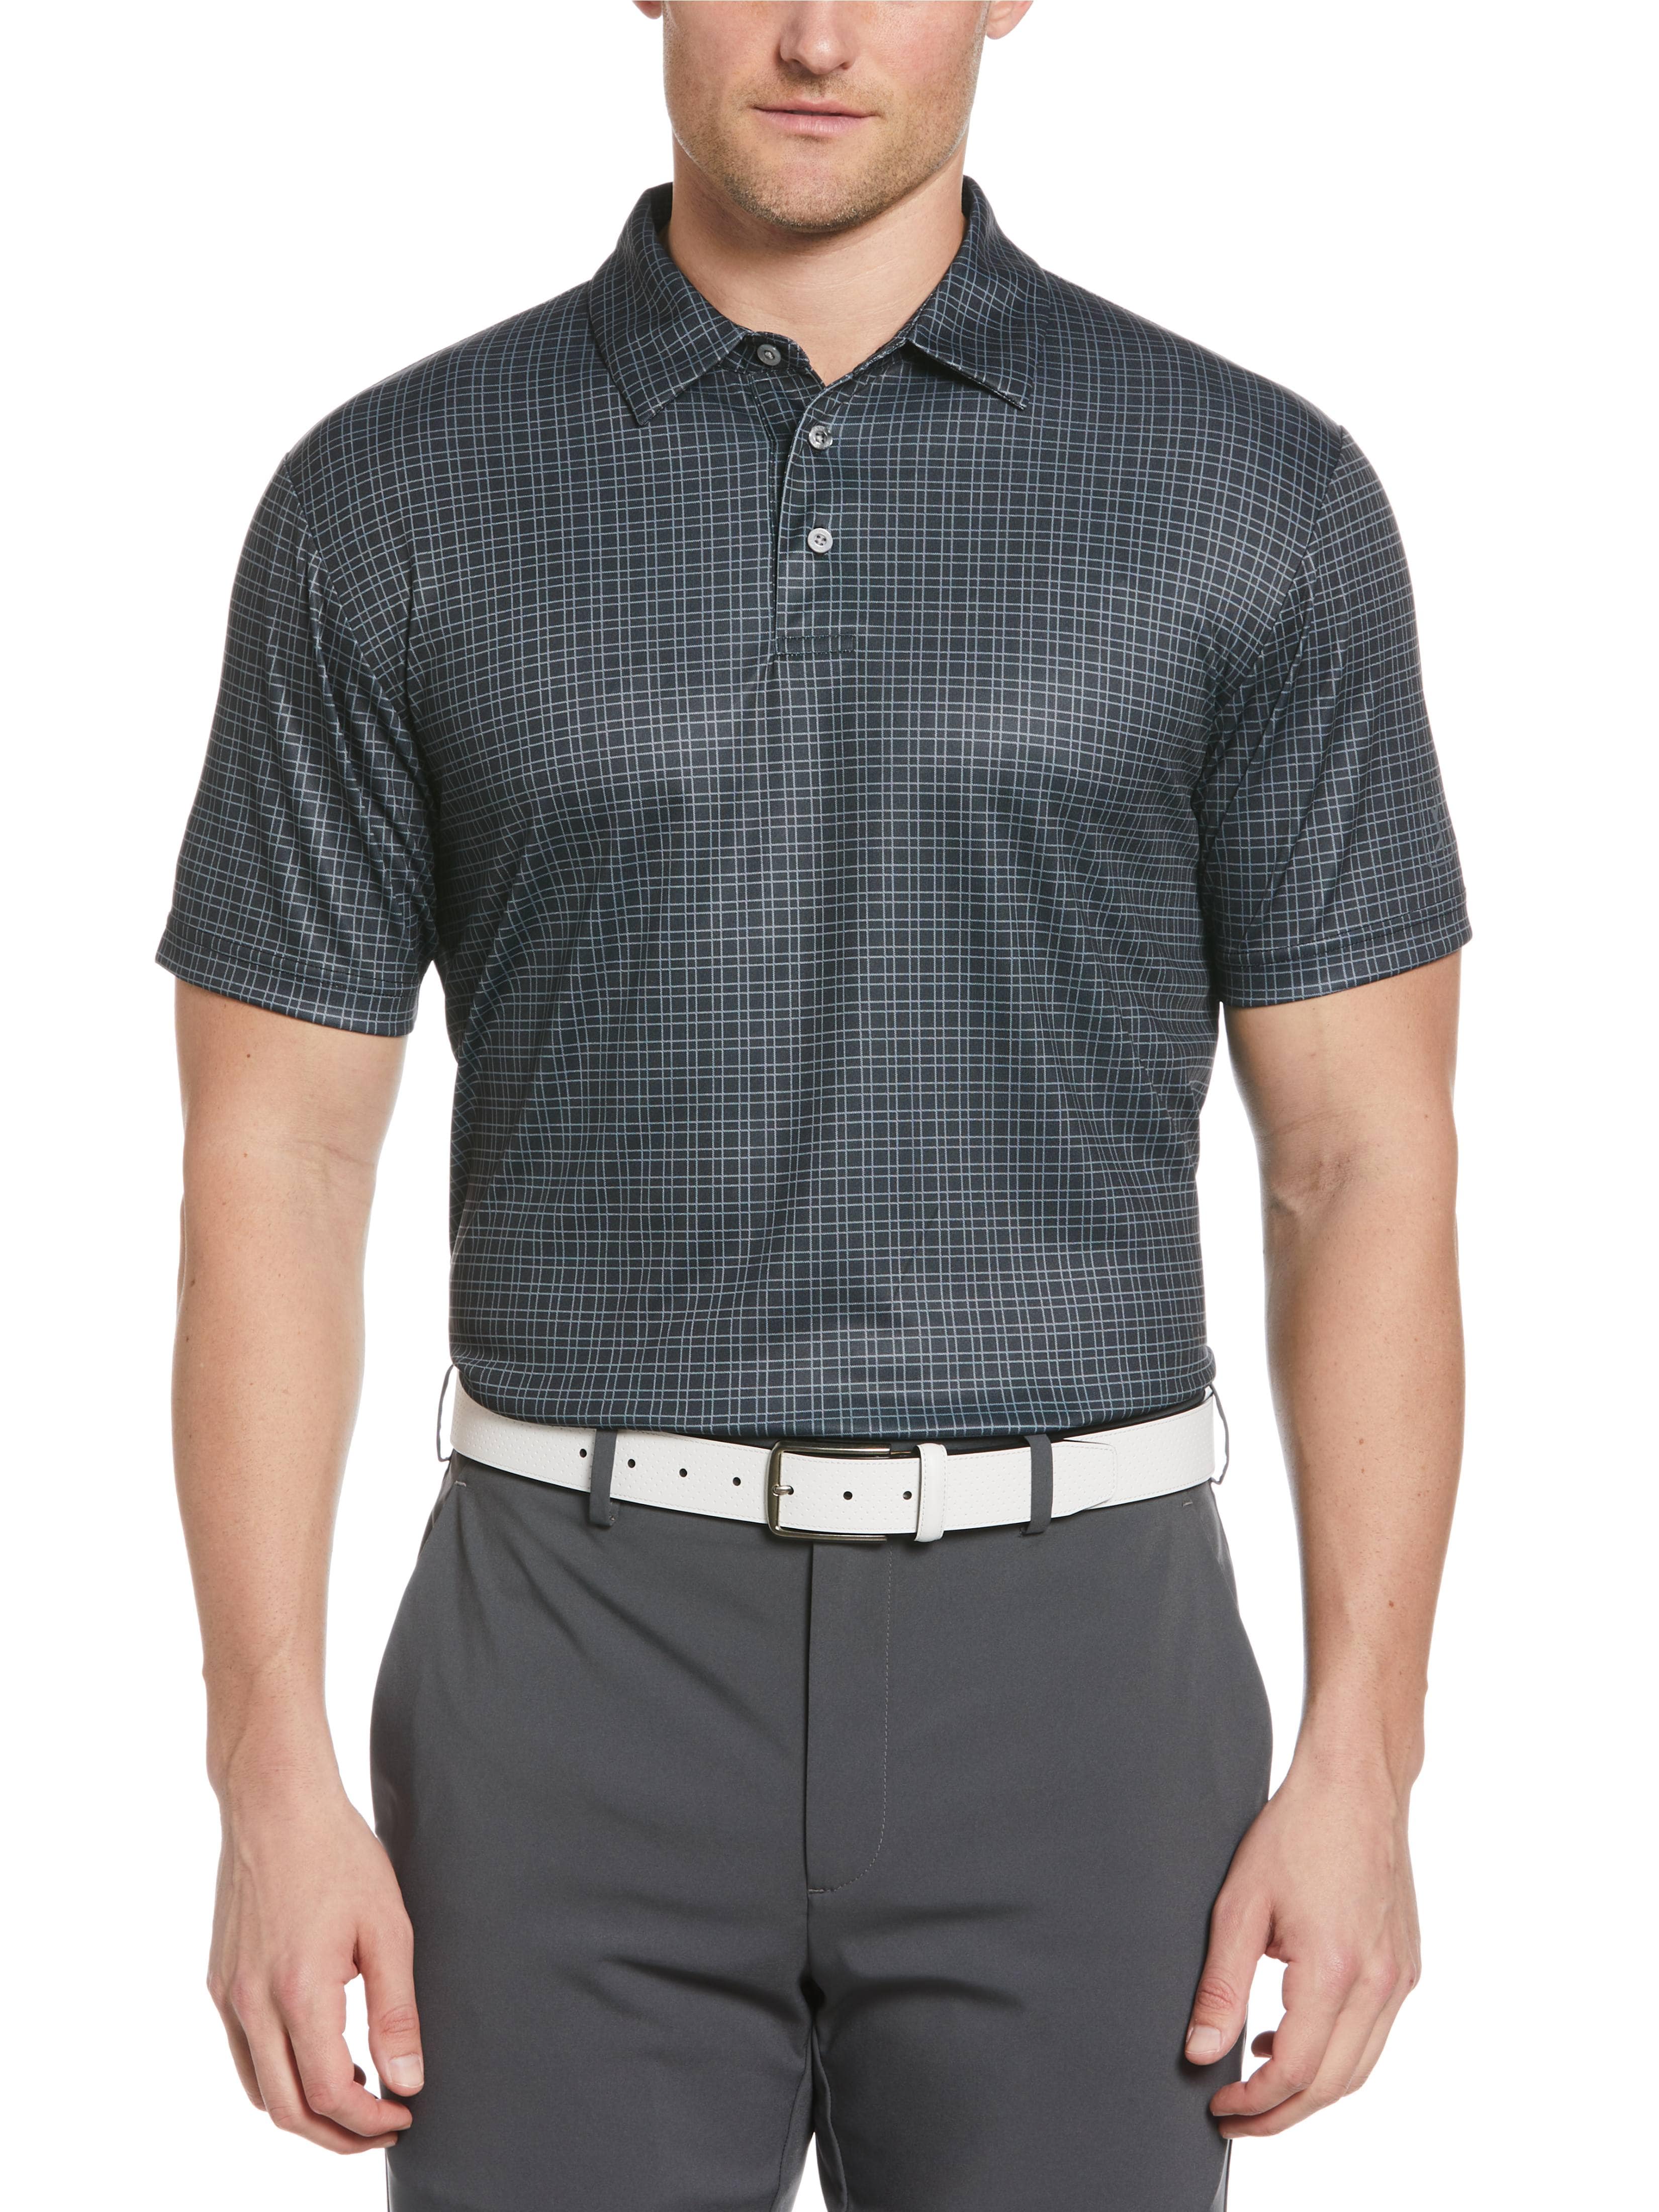 PGA TOUR Apparel Mens Menswear Print Golf Polo Shirt, Size Small, Black, 100% Polyester | Golf Apparel Shop